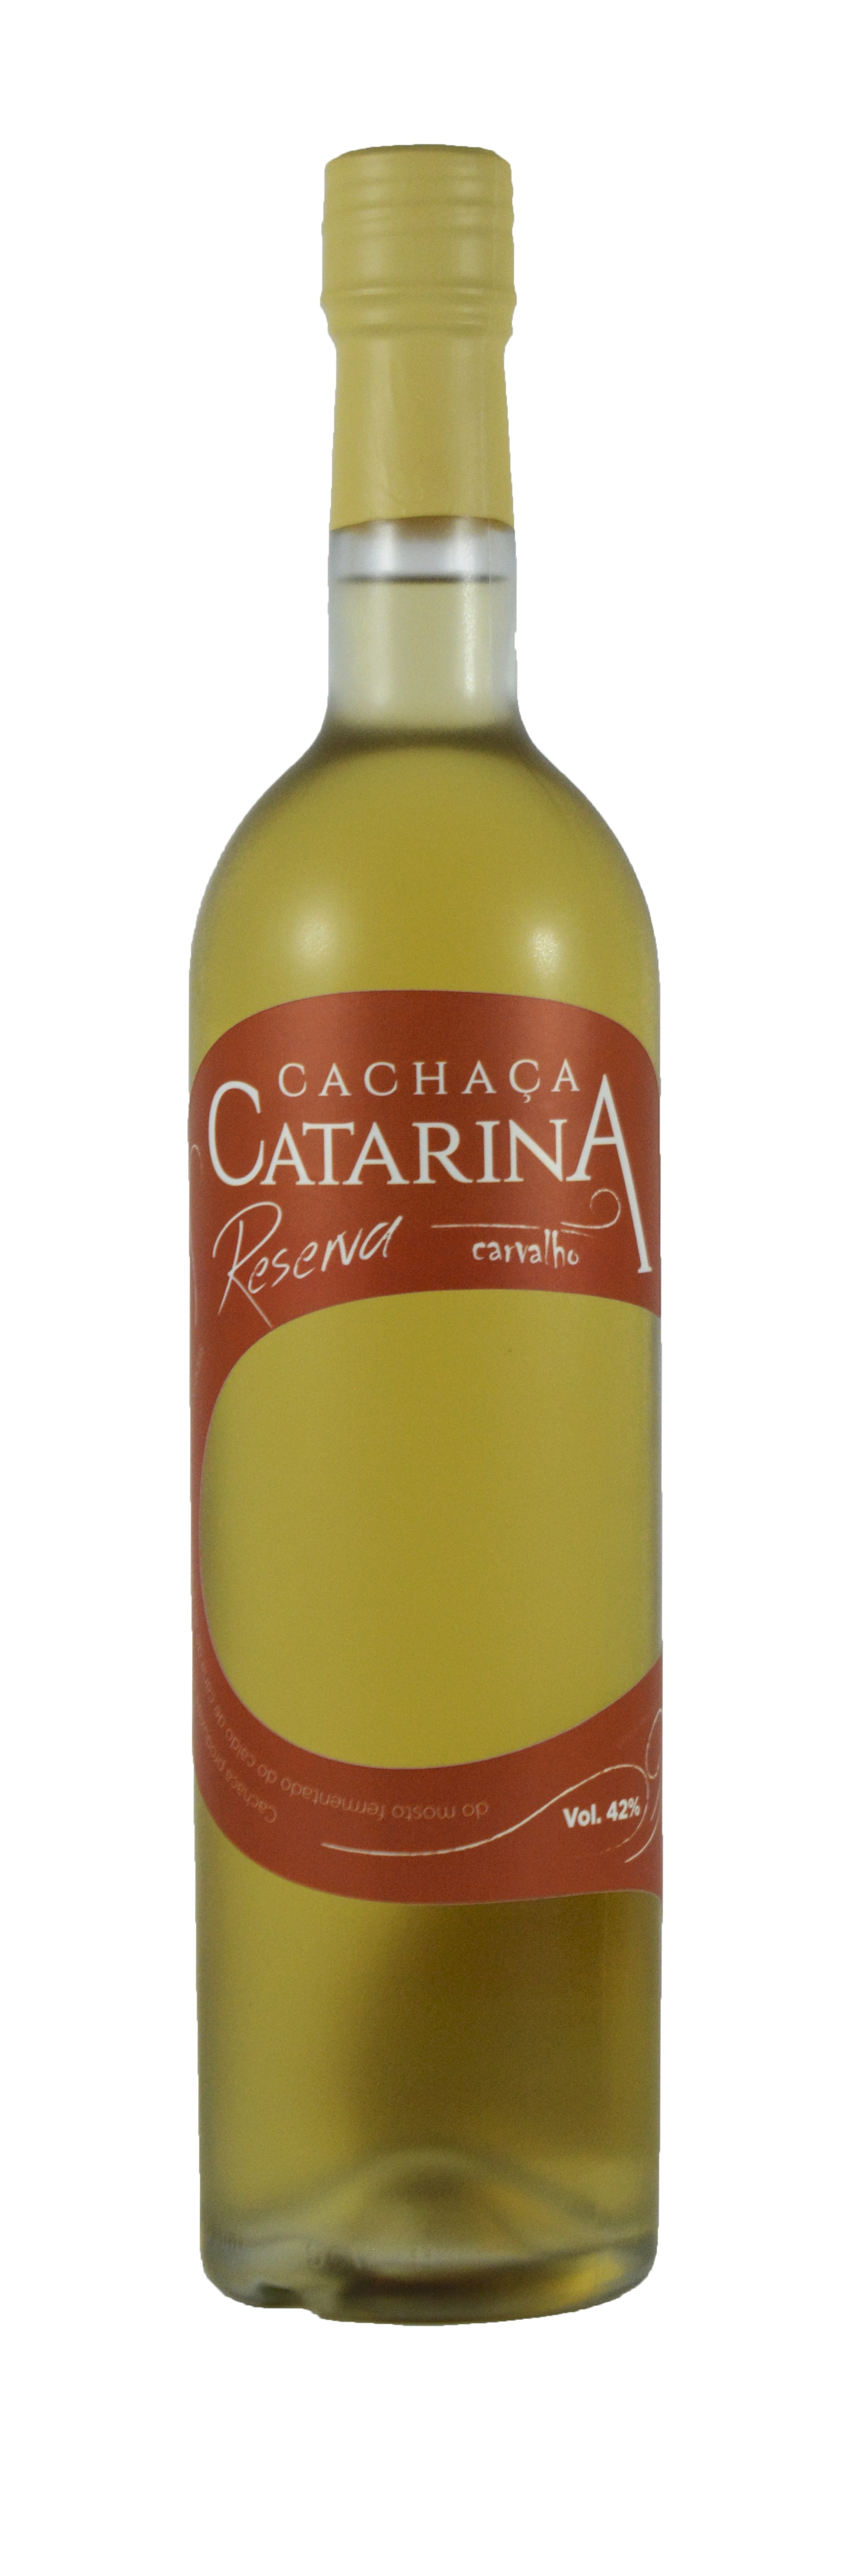 Cachaça Catarina Reserva Carvalho 750 ml